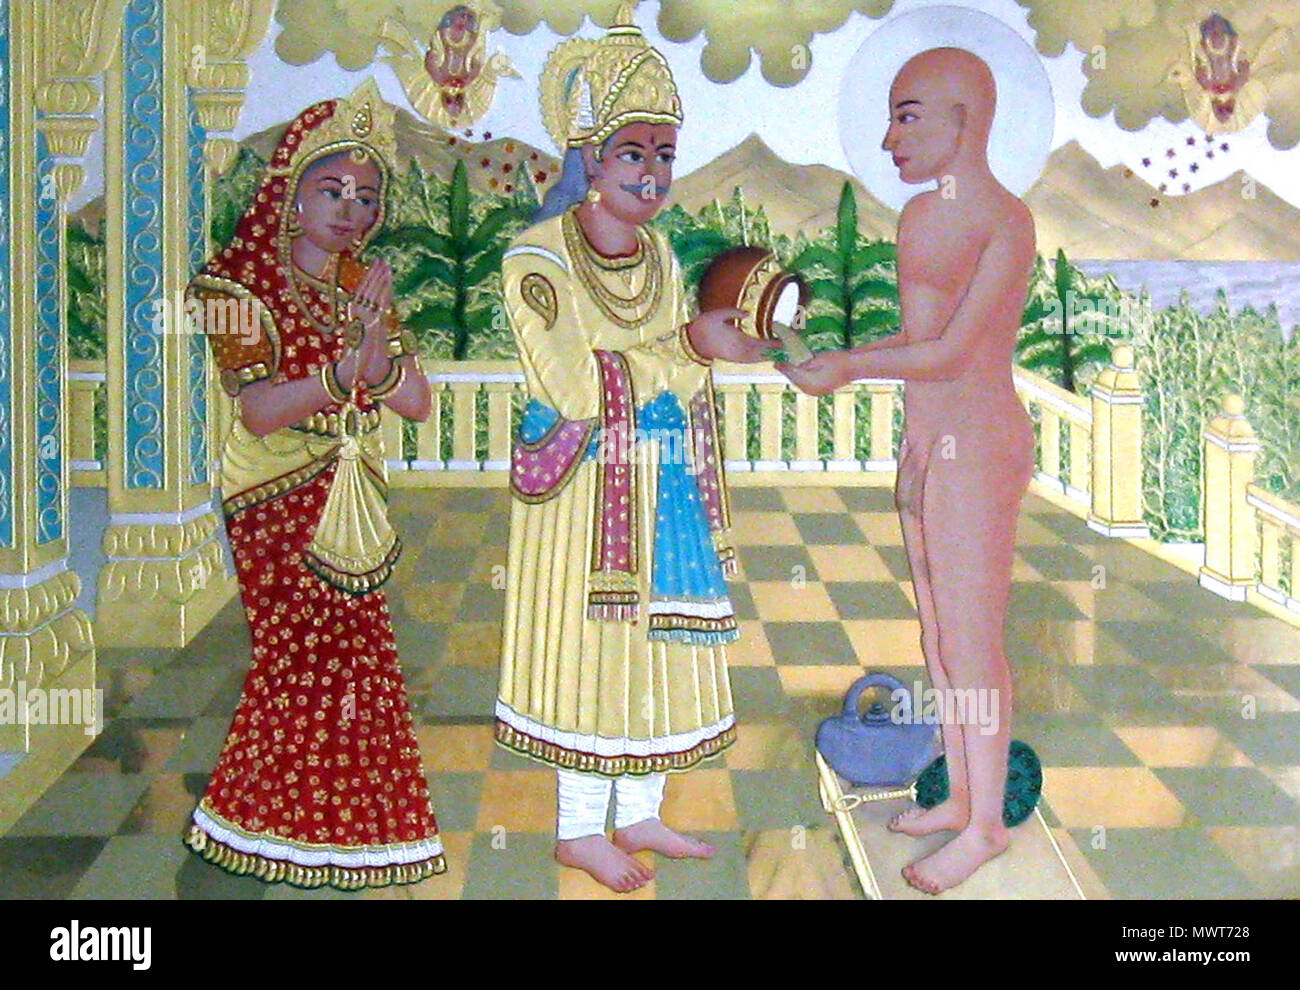 . English: This is Plate from temple shows Mahavira acception alms from Lay Jain householder. 19 December 2009. Anishshah19 388 Mahavira Accepting Alms Stock Photo